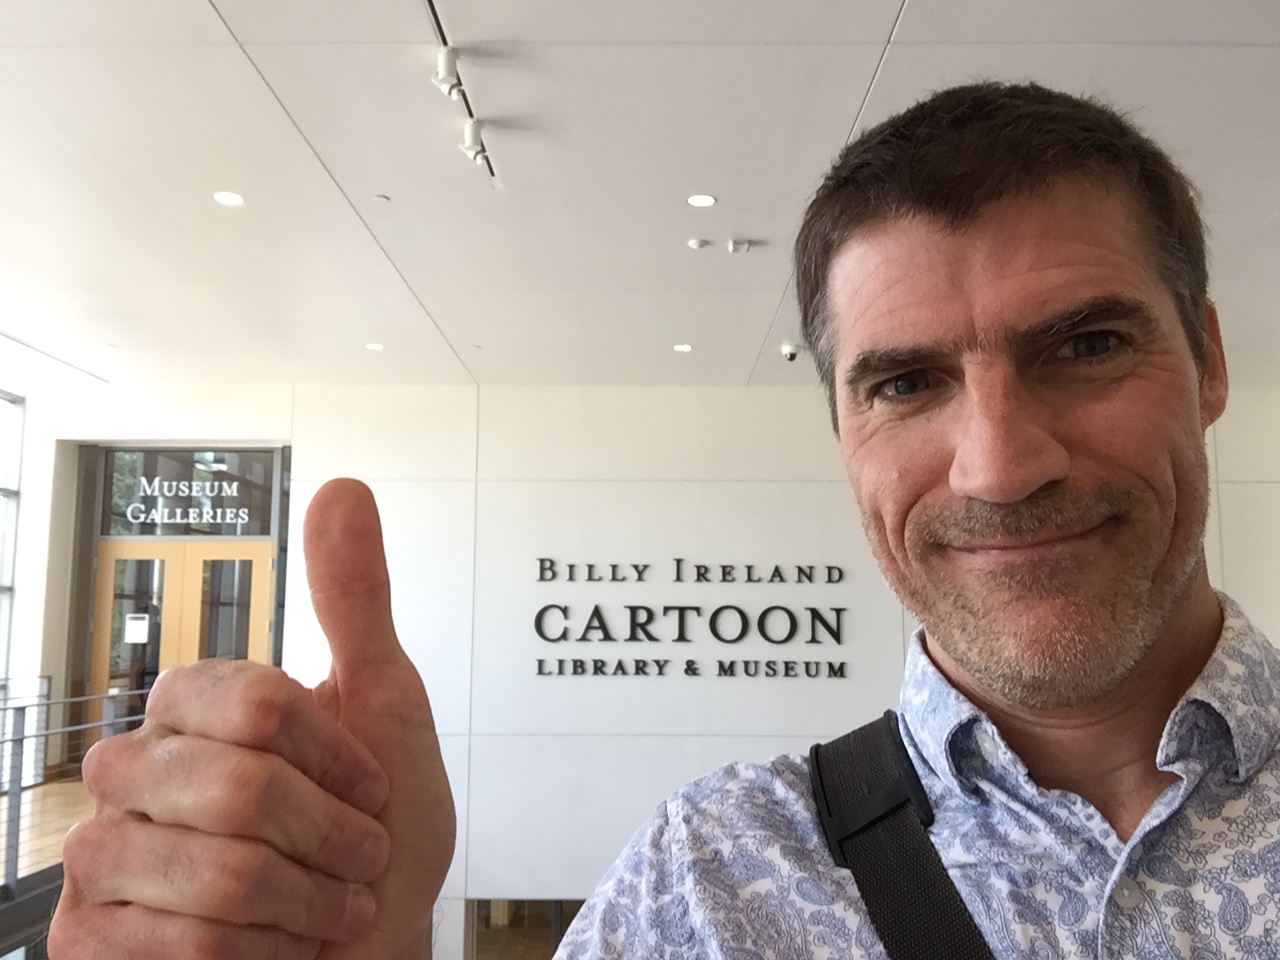 At the Billy Ireland Cartoon Museum